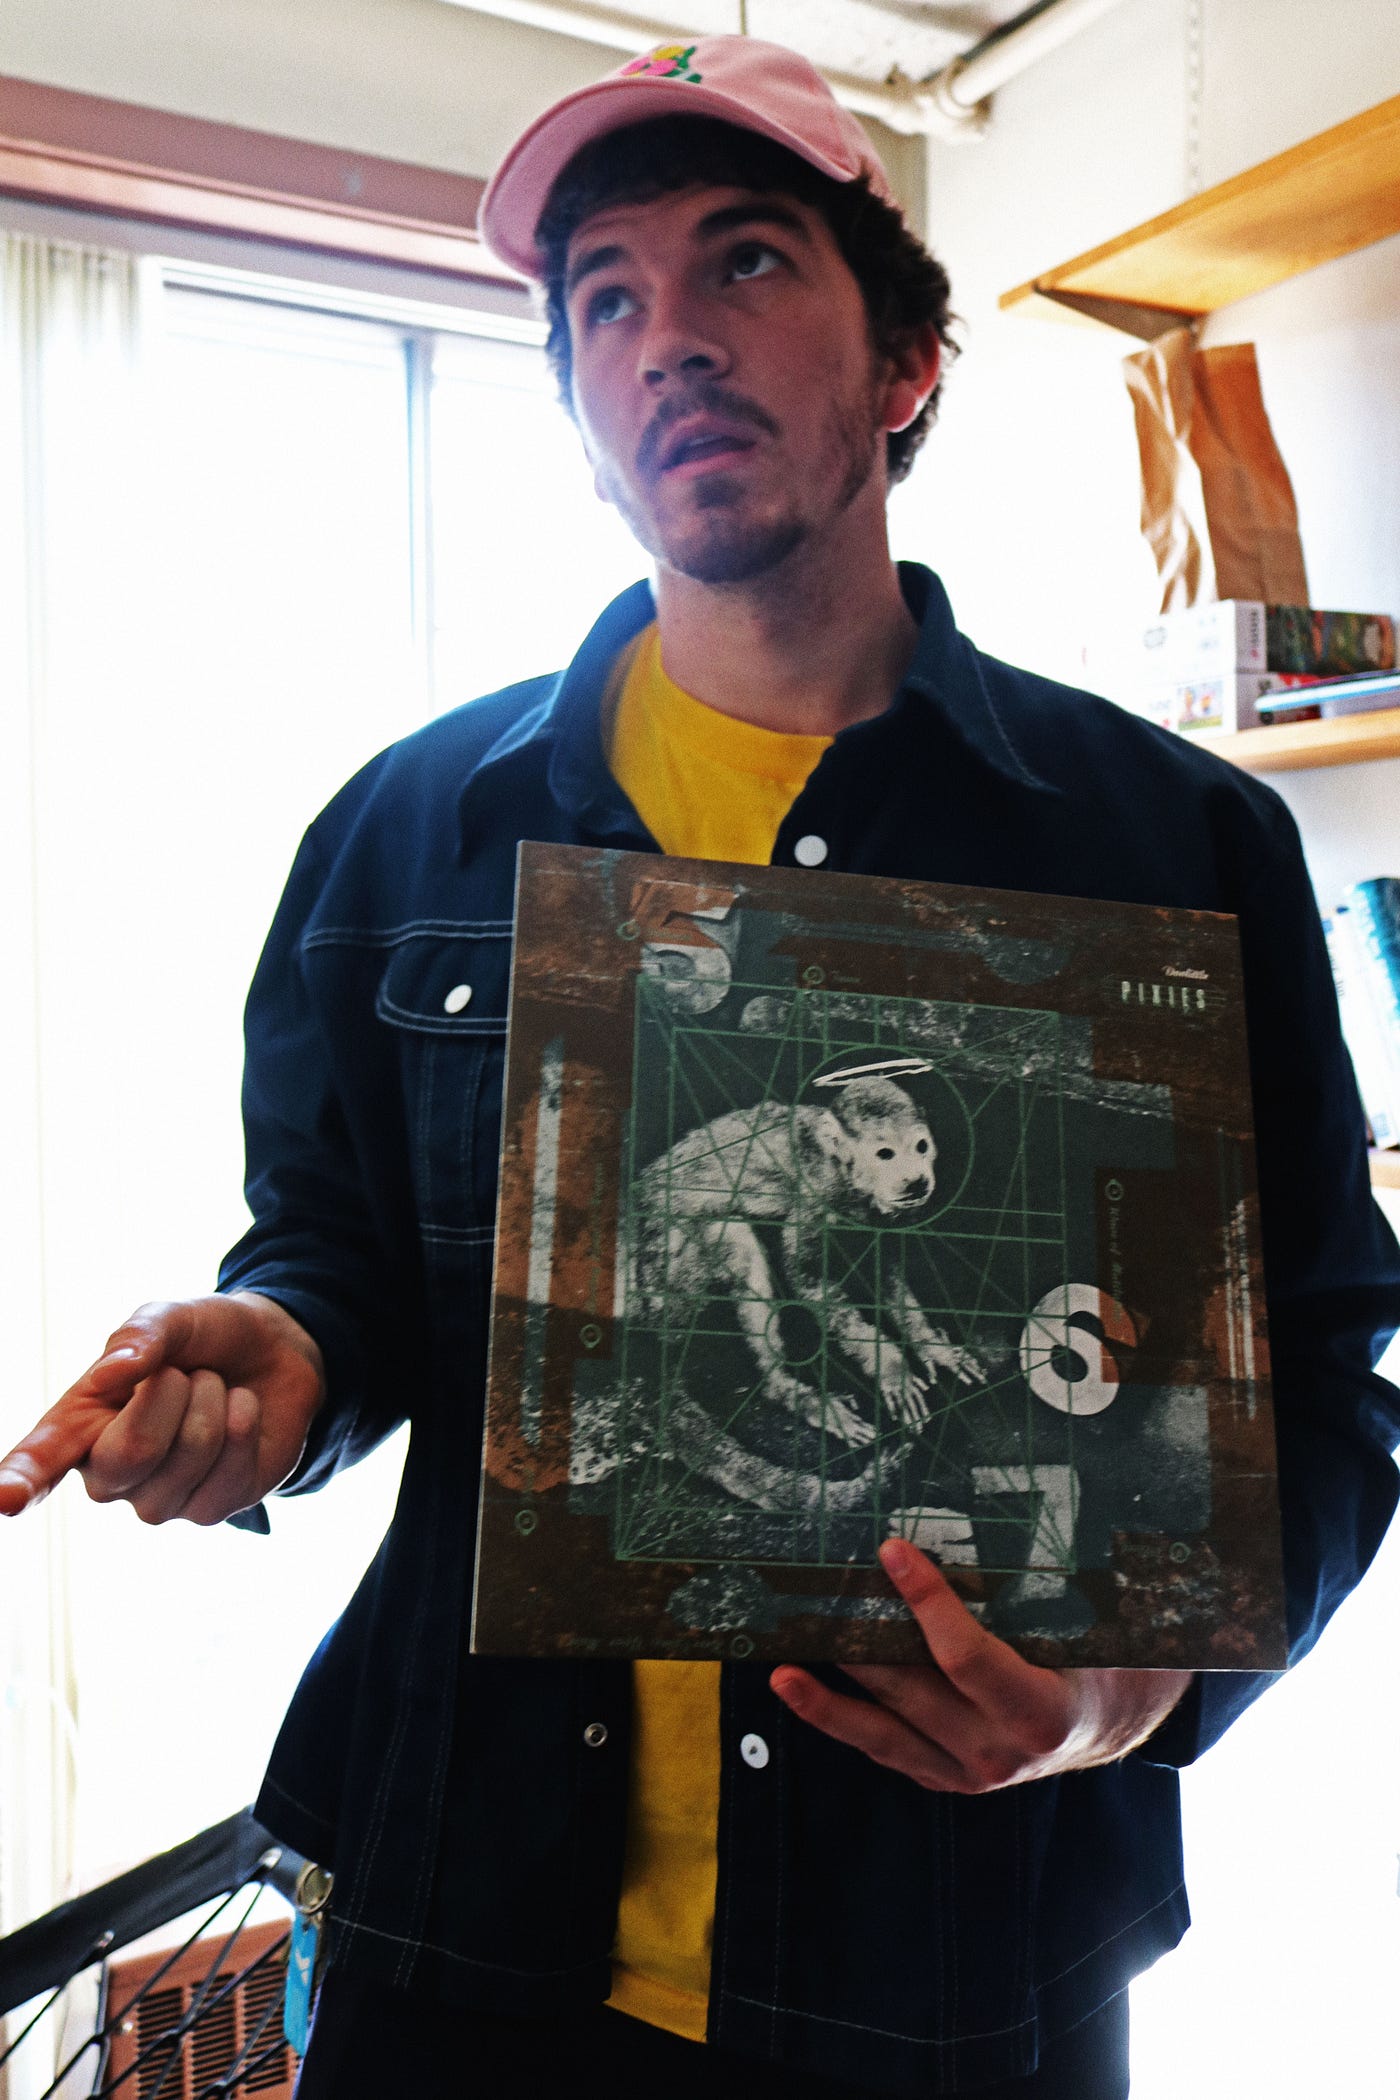 Vinyl in the 21st Century: Zack Brida, by Zoe Reifel